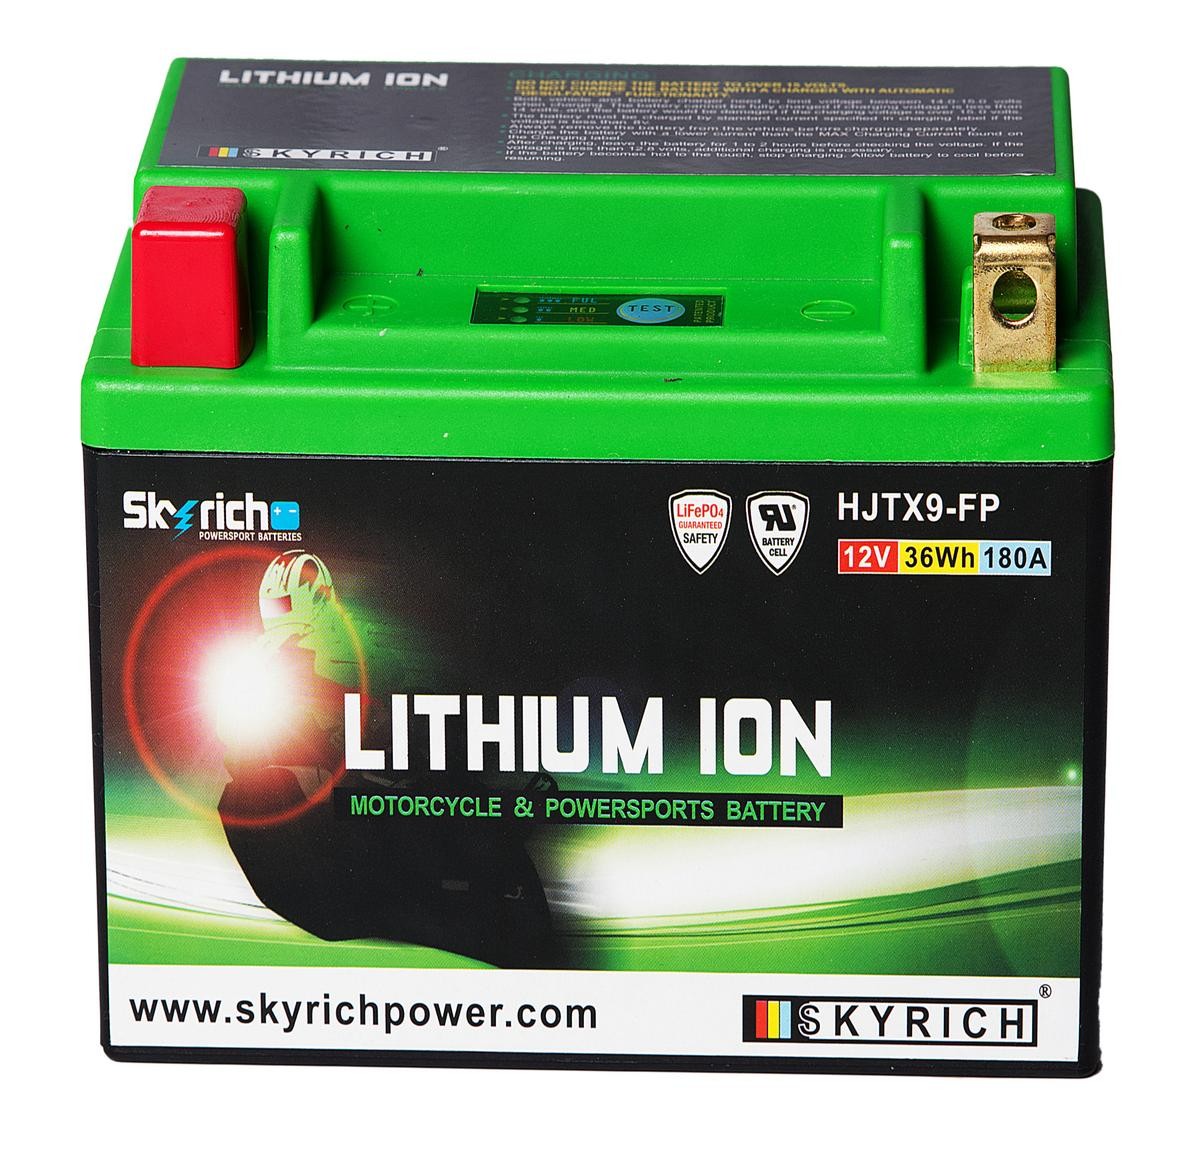 CCM GP Batterie 12V 3Ah 180A N Li-Ionen-Batterie SKYRICH LITHIUM ION HJTX9-FP